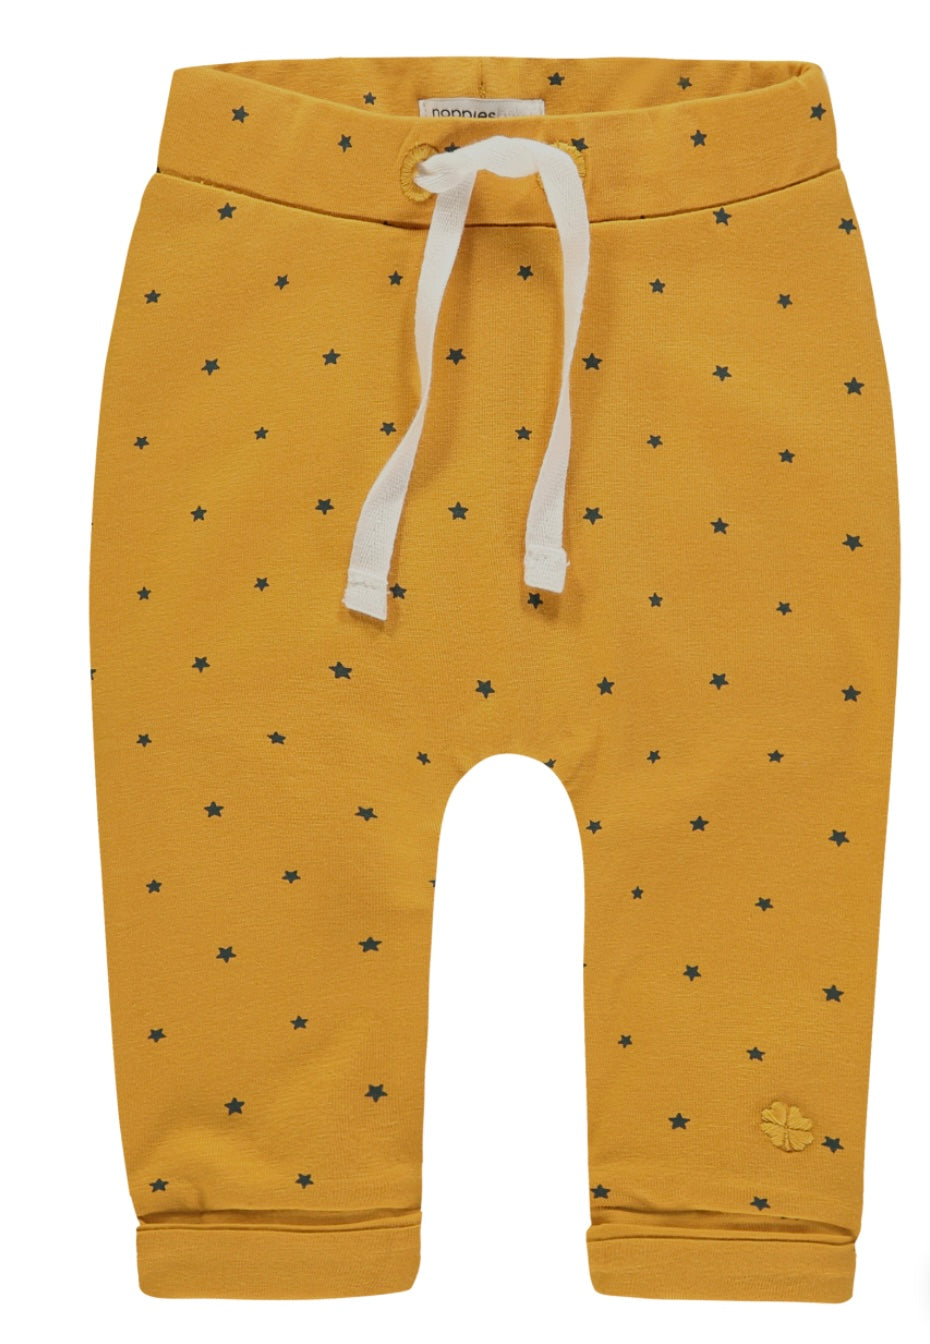 Noppies - pantalon jaune avec étoiles marines, 6-9 mois